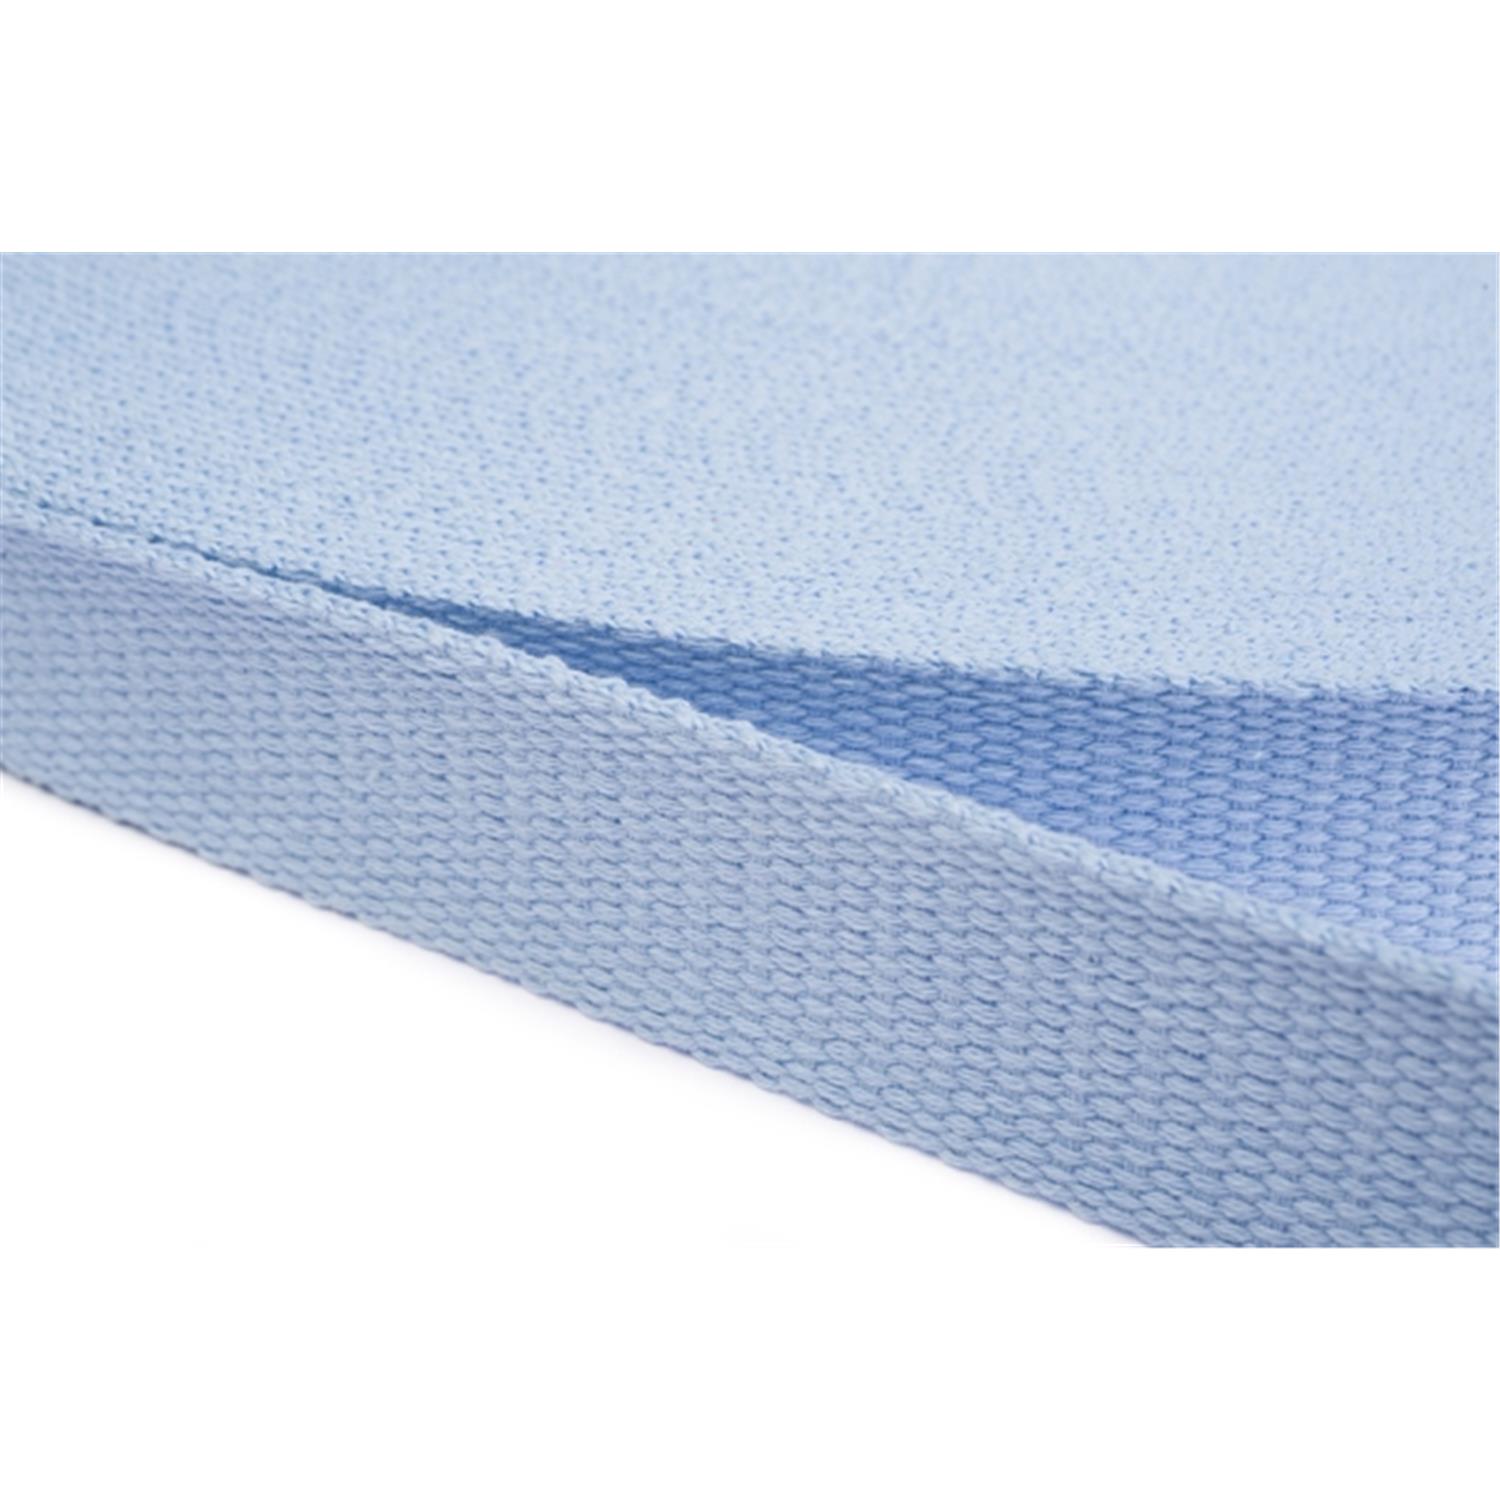 Gurtband aus Baumwolle 15mm in 20 Farben 11 - hellblau 12 Meter